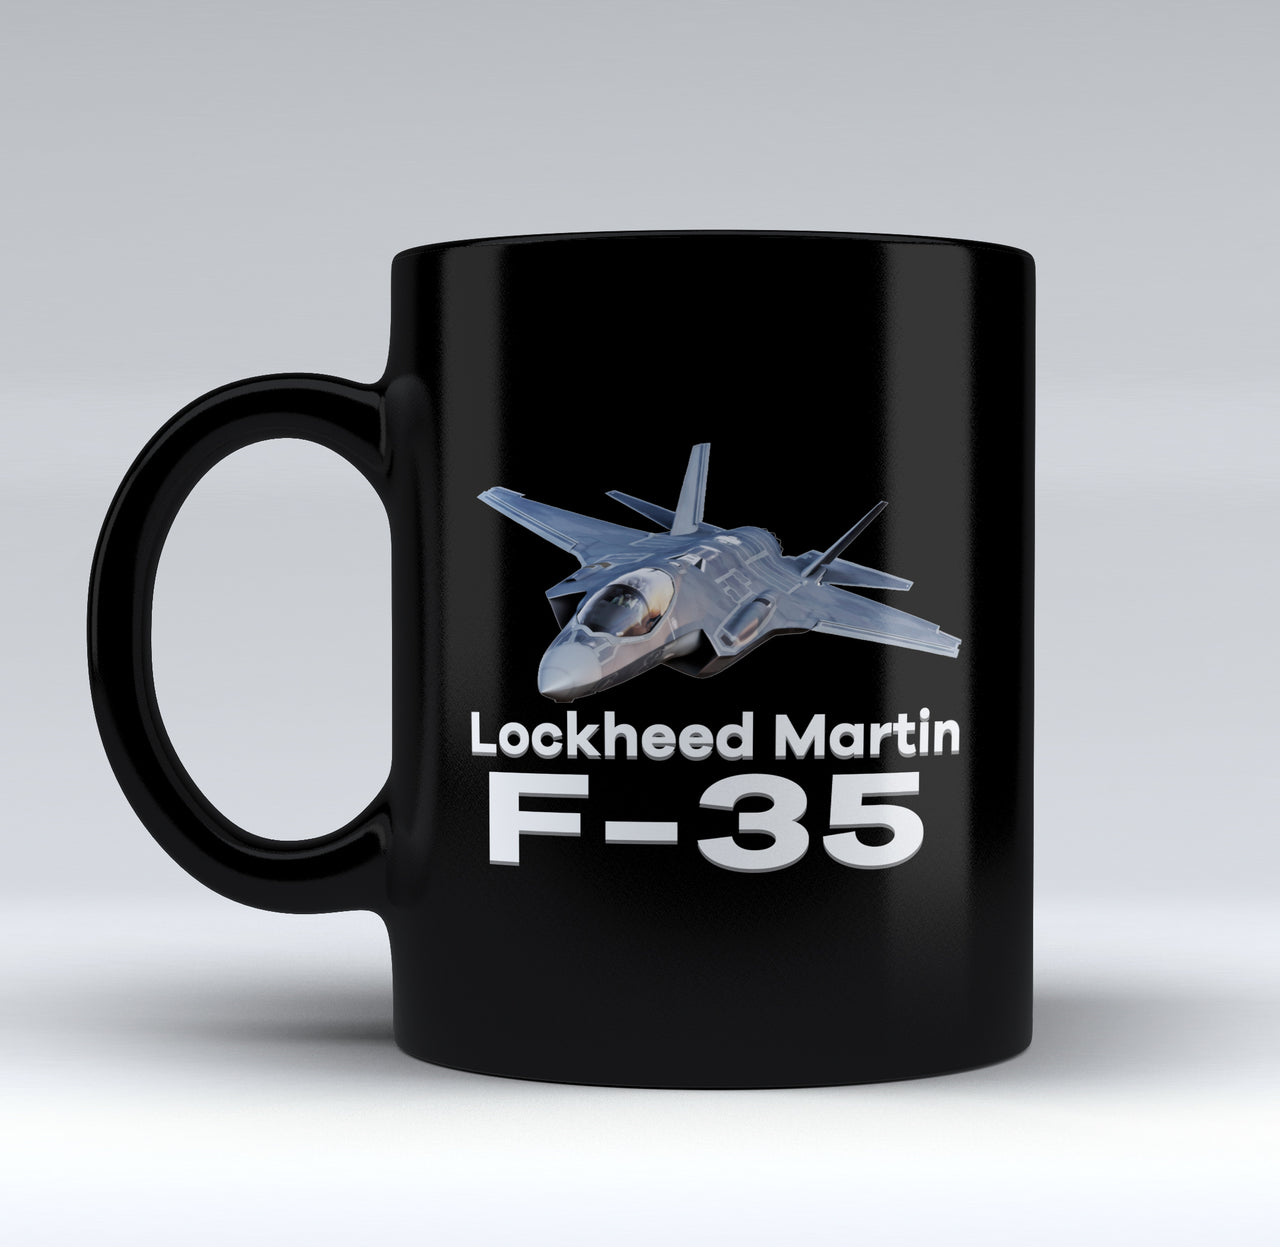 The Lockheed Martin F35 Designed Black Mugs